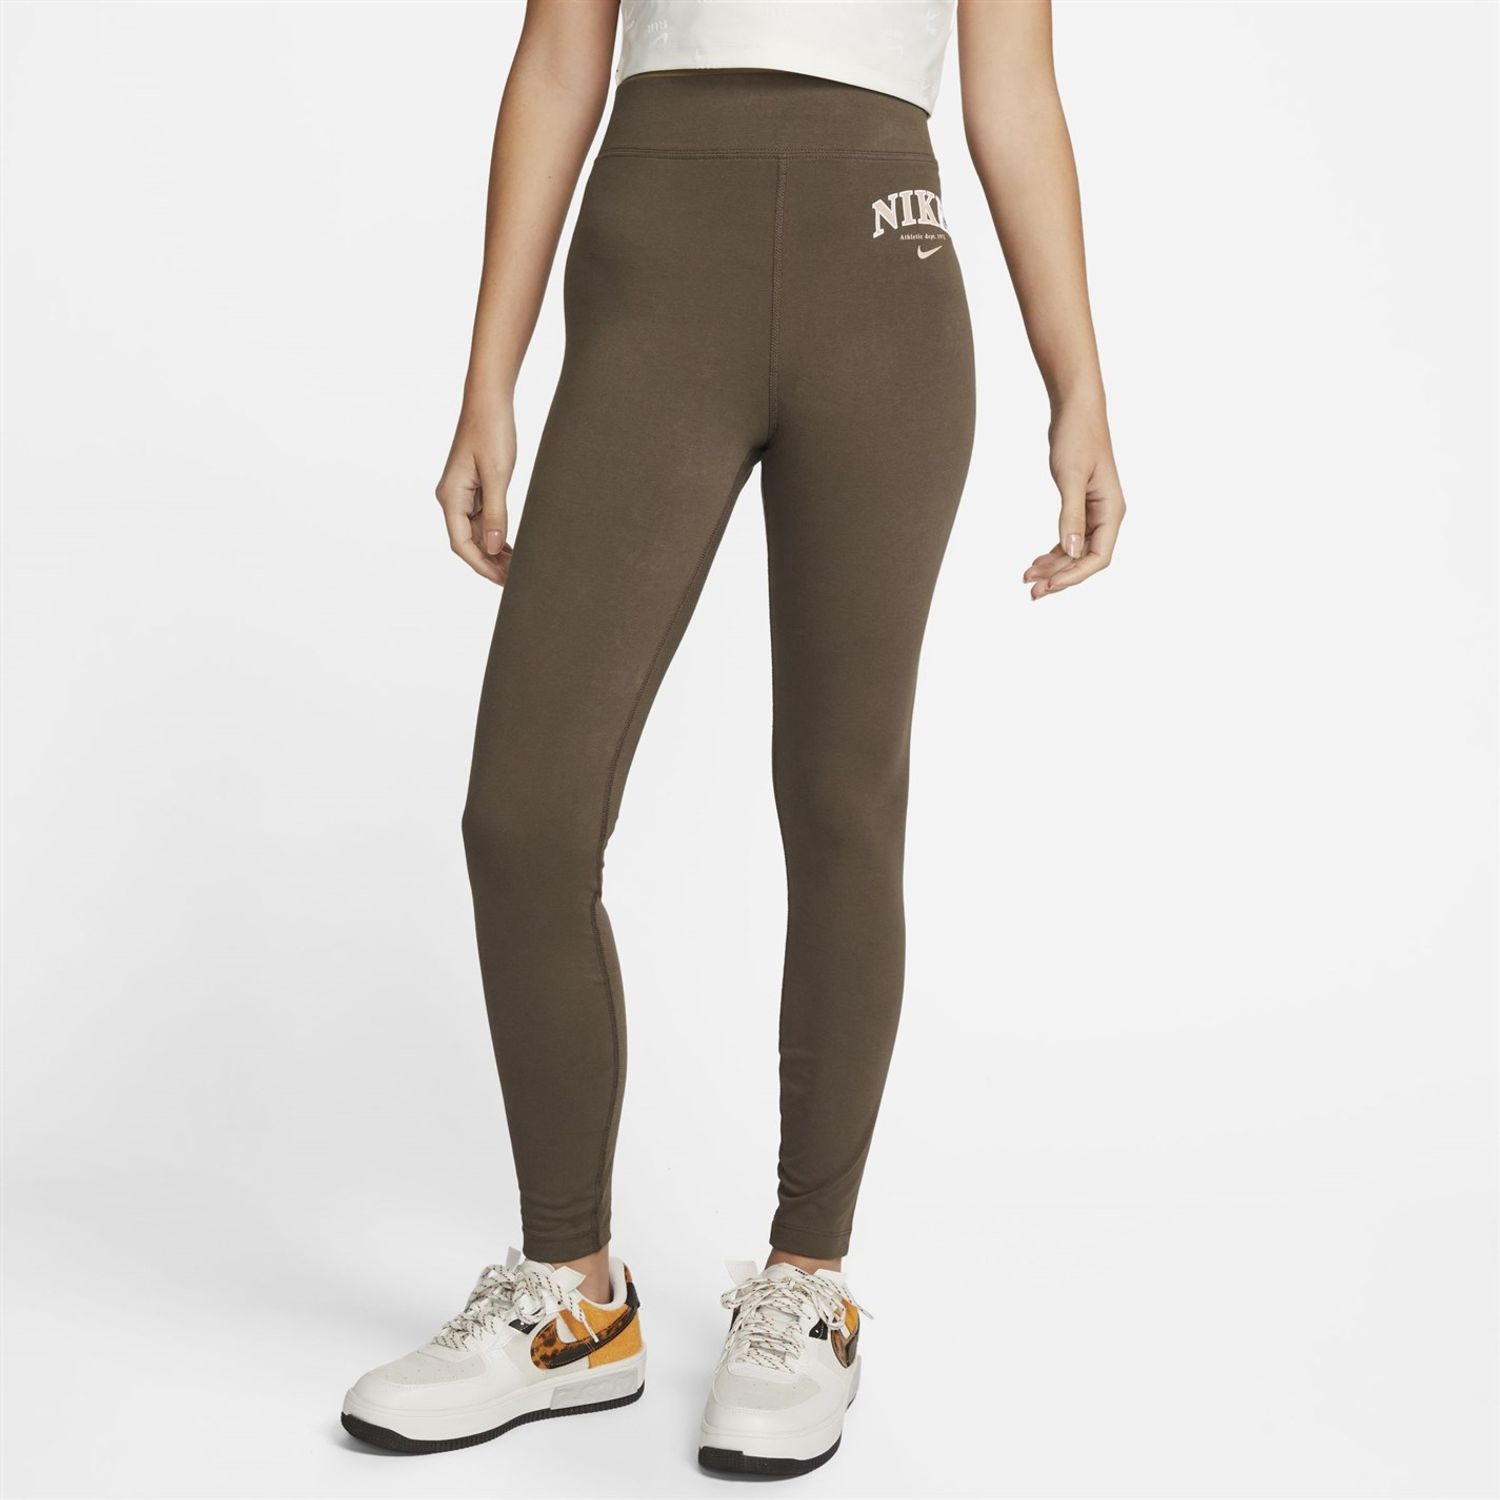 NWT Nike Women's Fringe Training Boutique Leggings Pants Gym BV4670 677  $165 XS